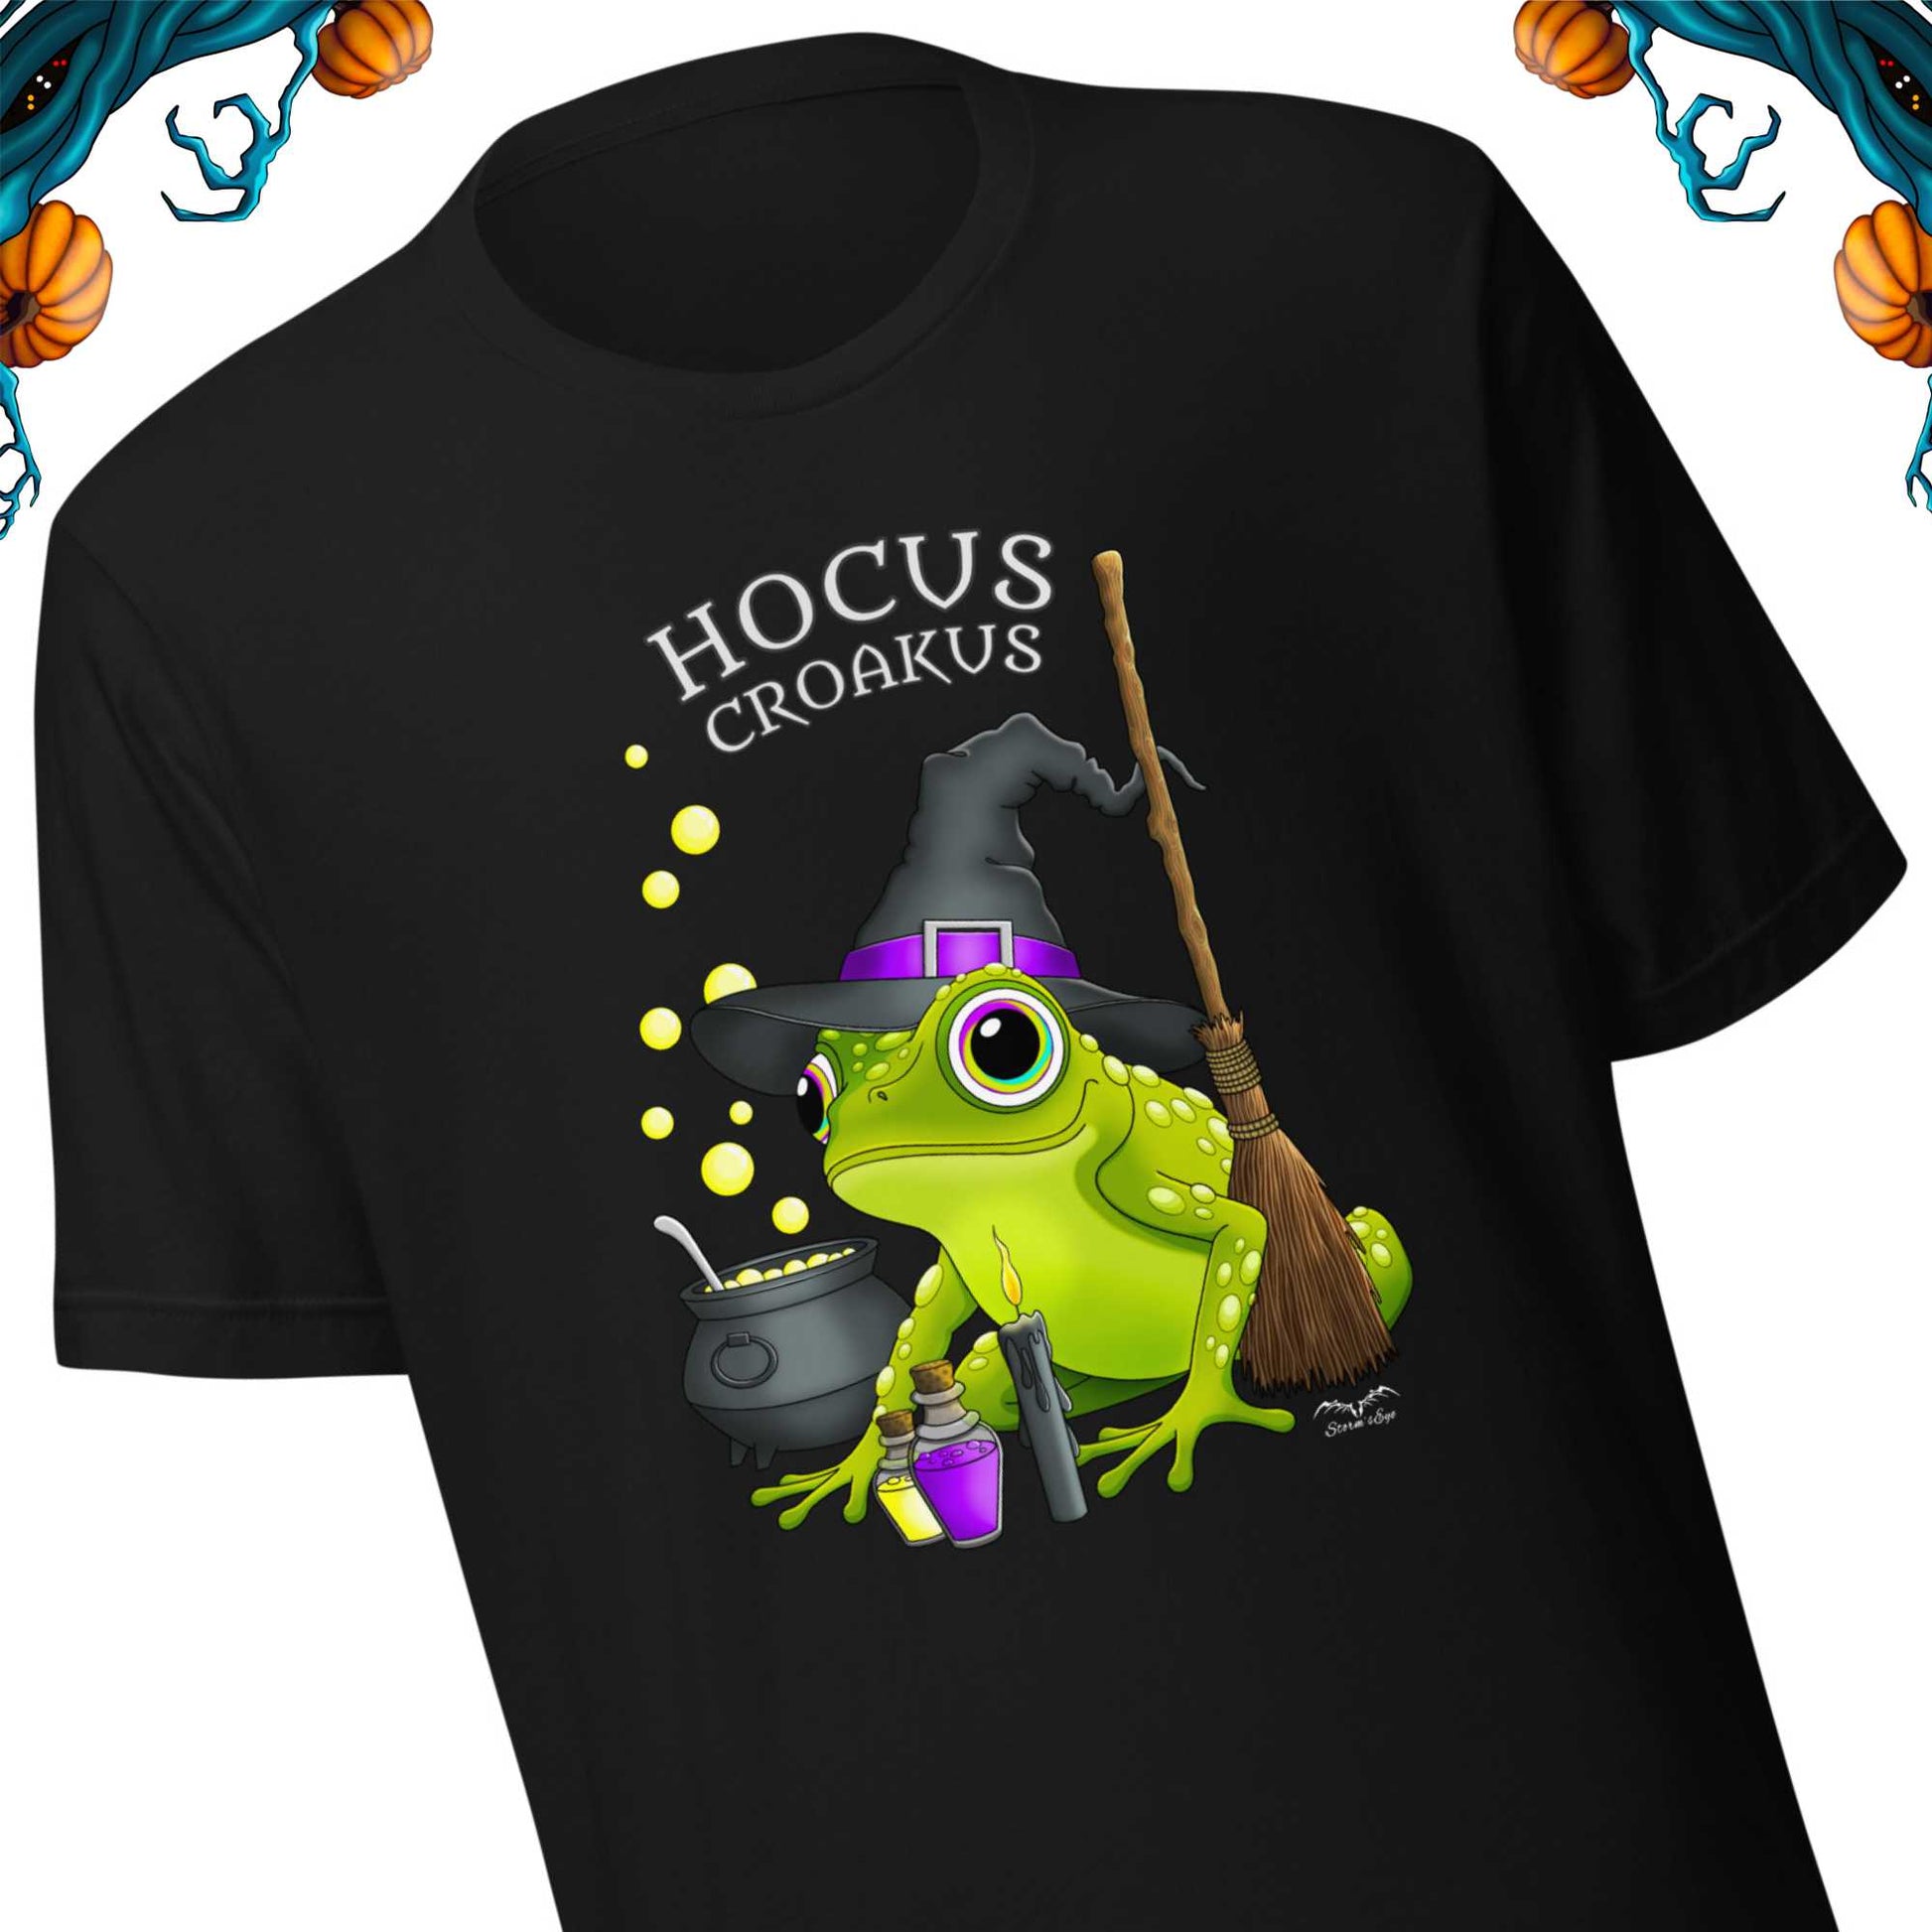 stormseye design witch frog hocus croakus T shirt, detail view black